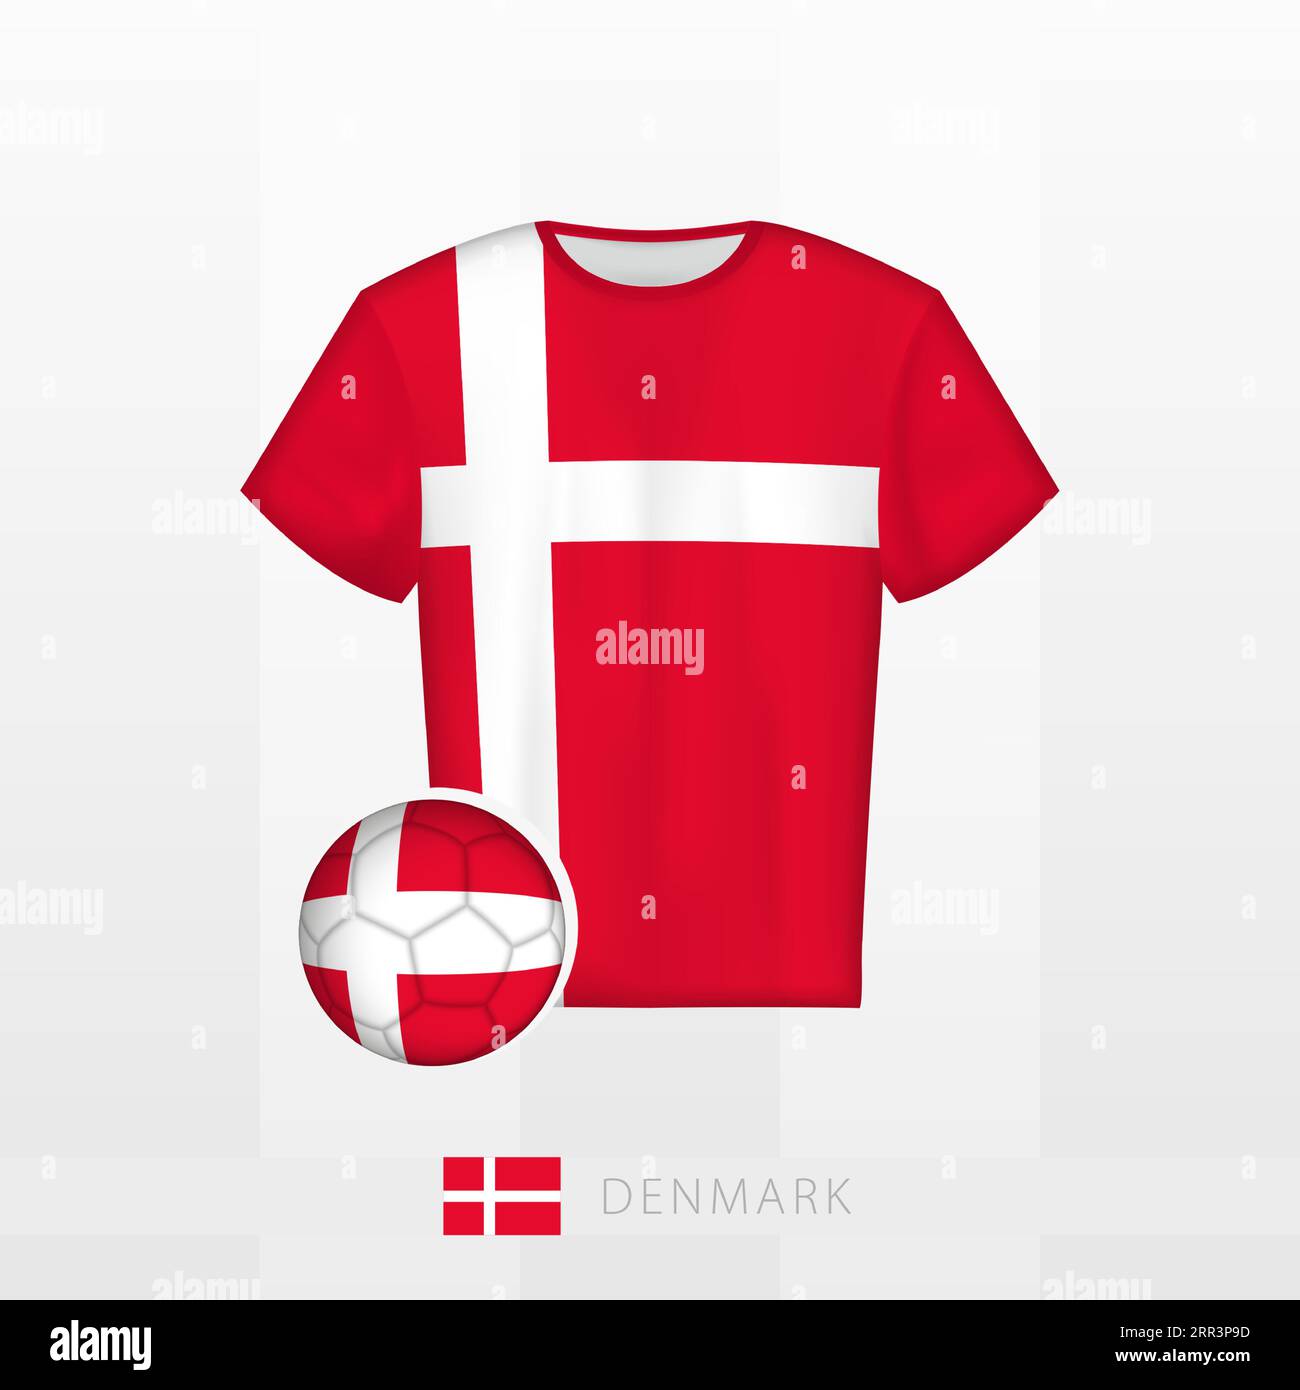 denmark national football team jersey